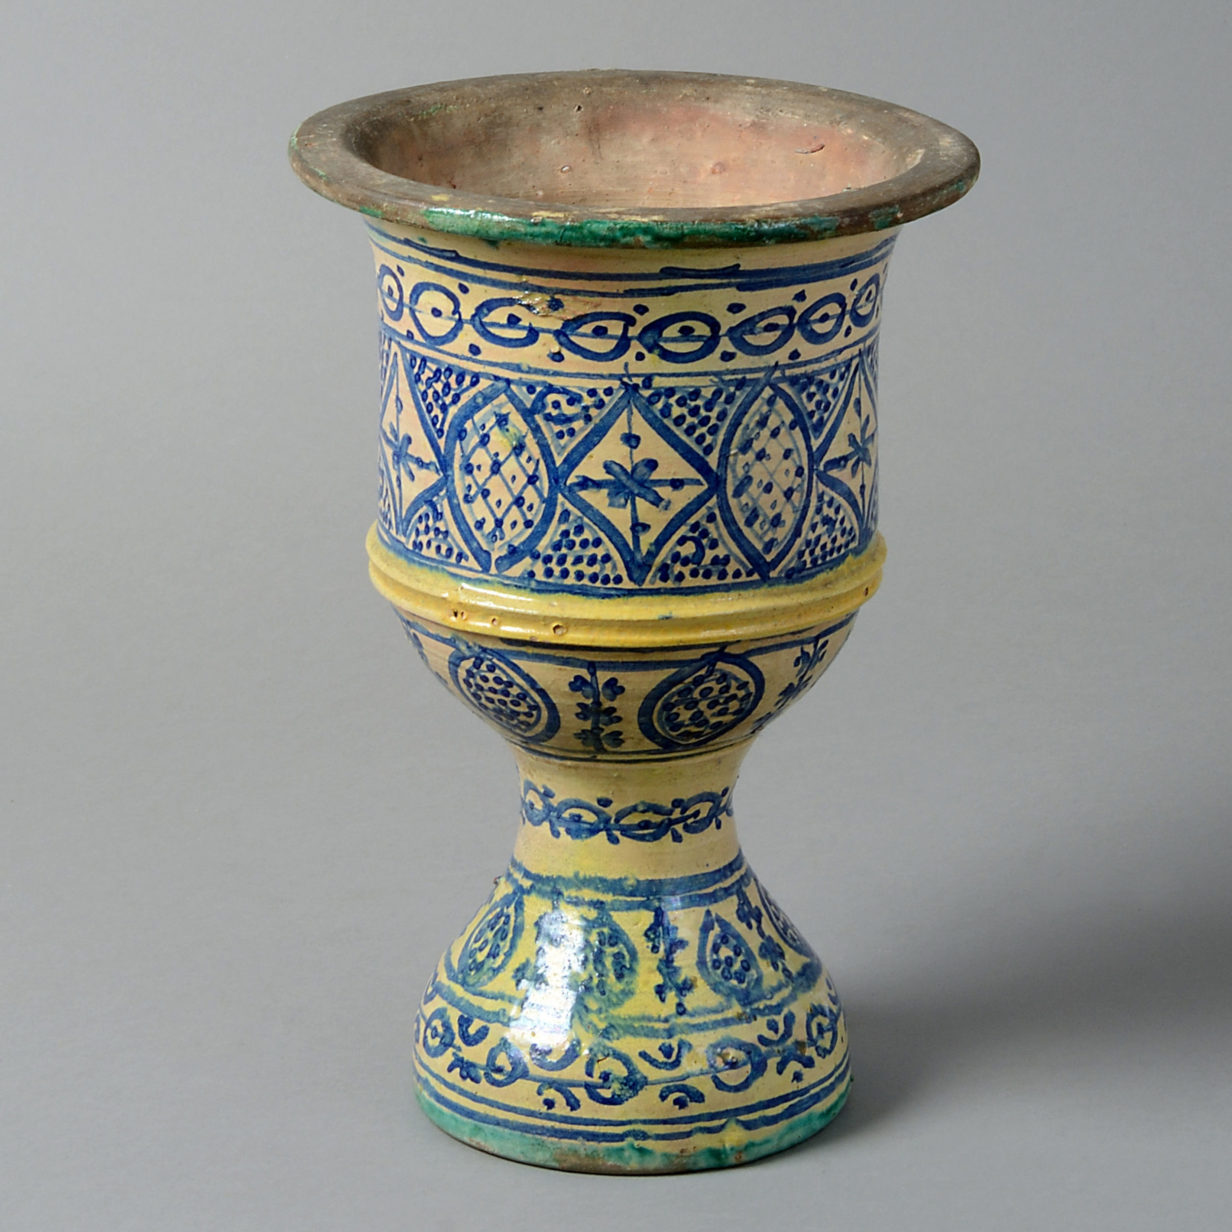 A 19th century polychrome moorish vase